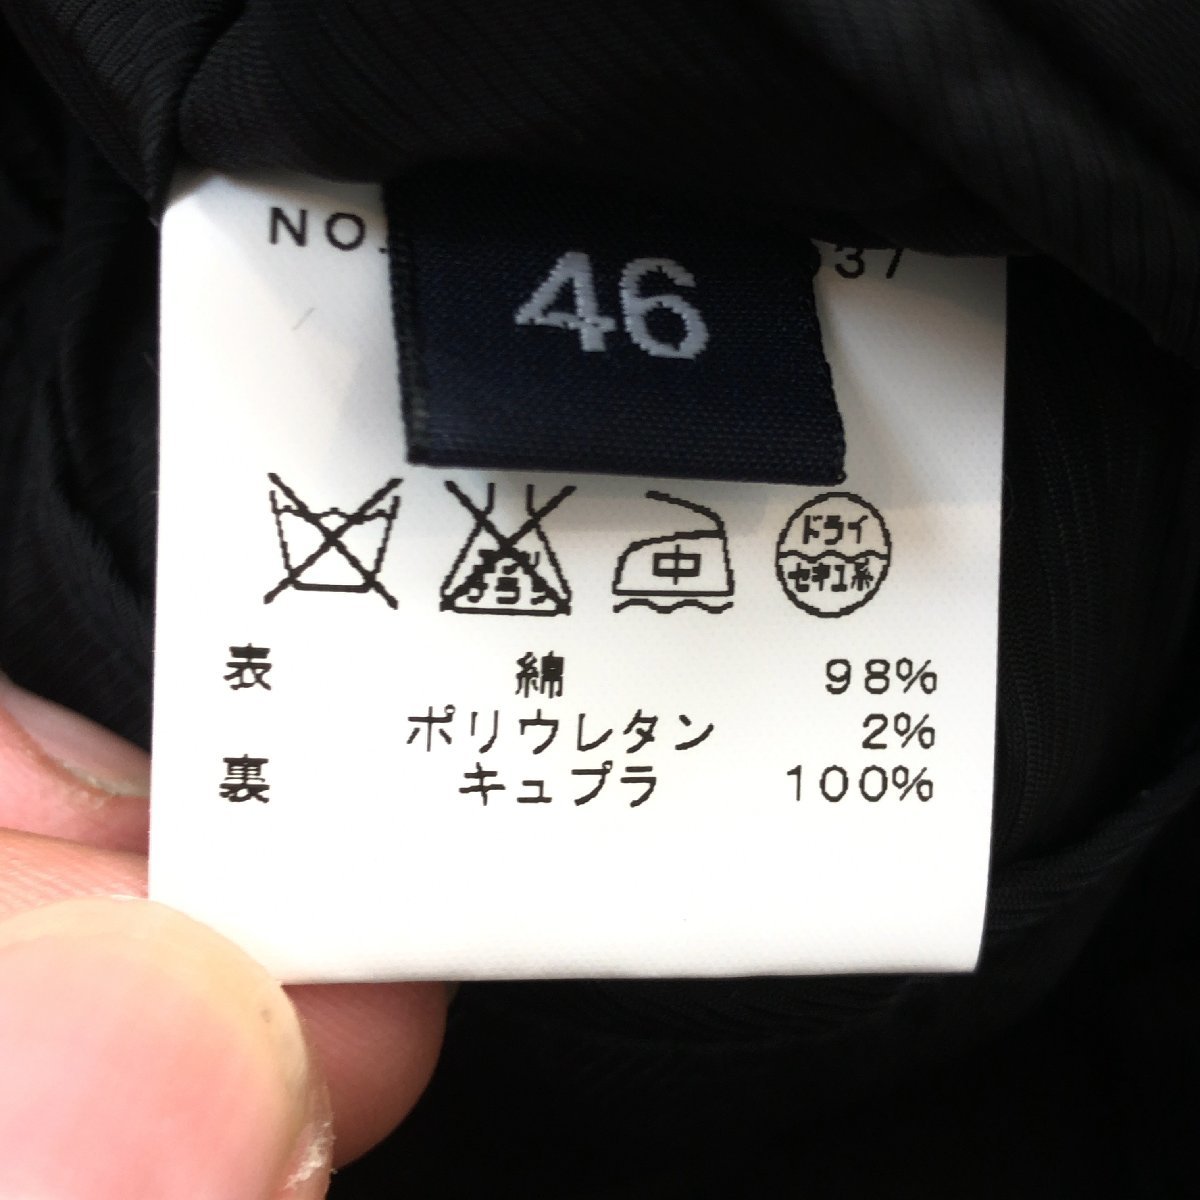 ●SHIPS シップス ベロア生地 ストライプ スーツジャケット 46(M) 黒 ブラック ストレッチ 日本製 国内正規品 メンズ 紳士_画像6